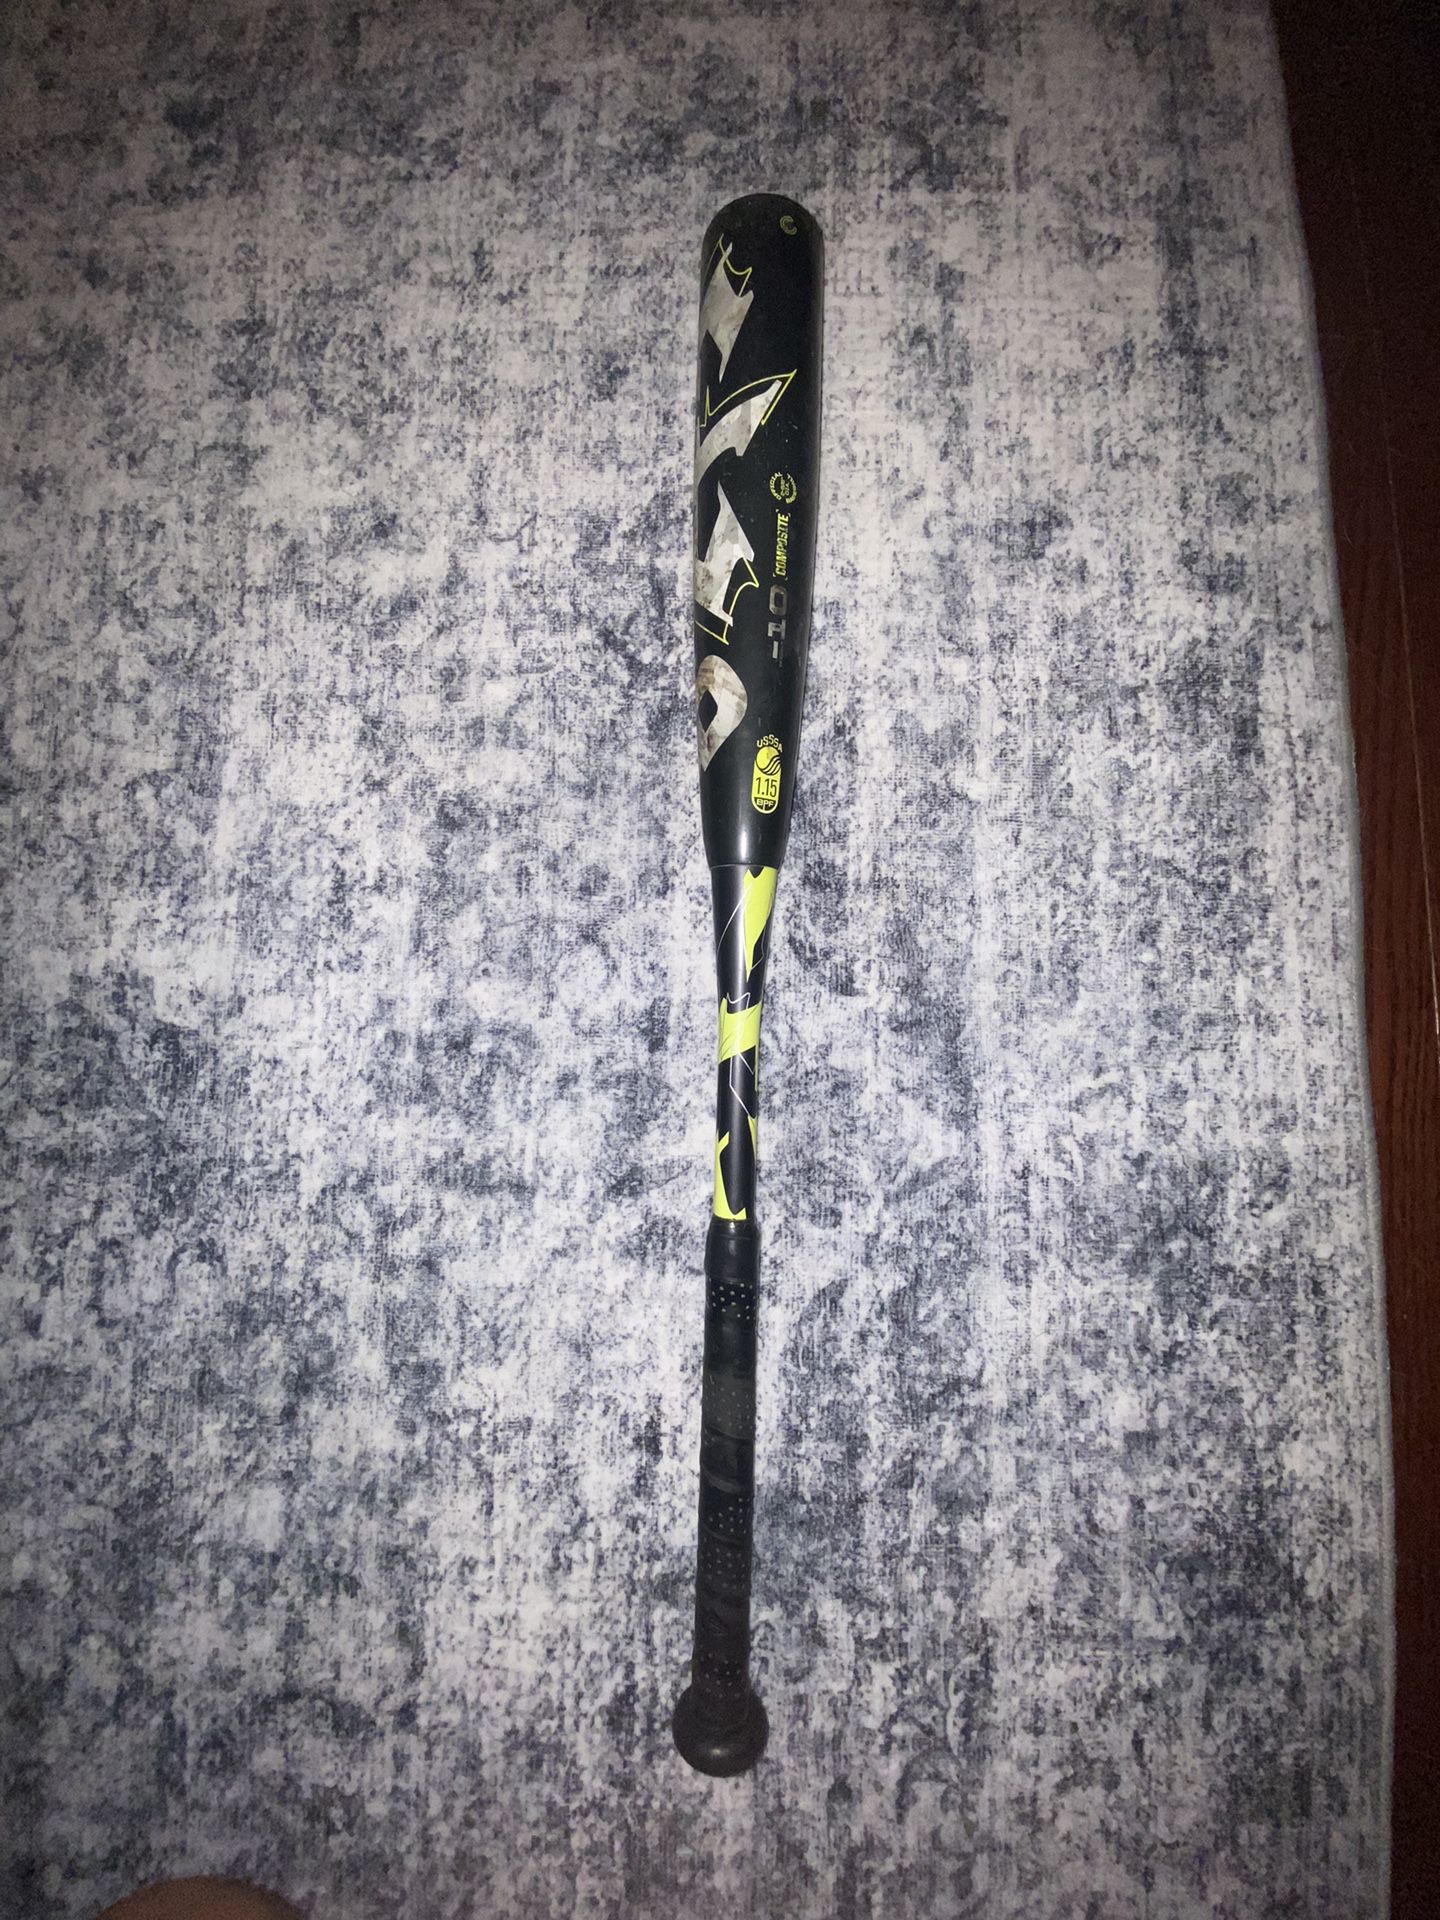 DeMarini Baseball Bat (Neon Green And Black)